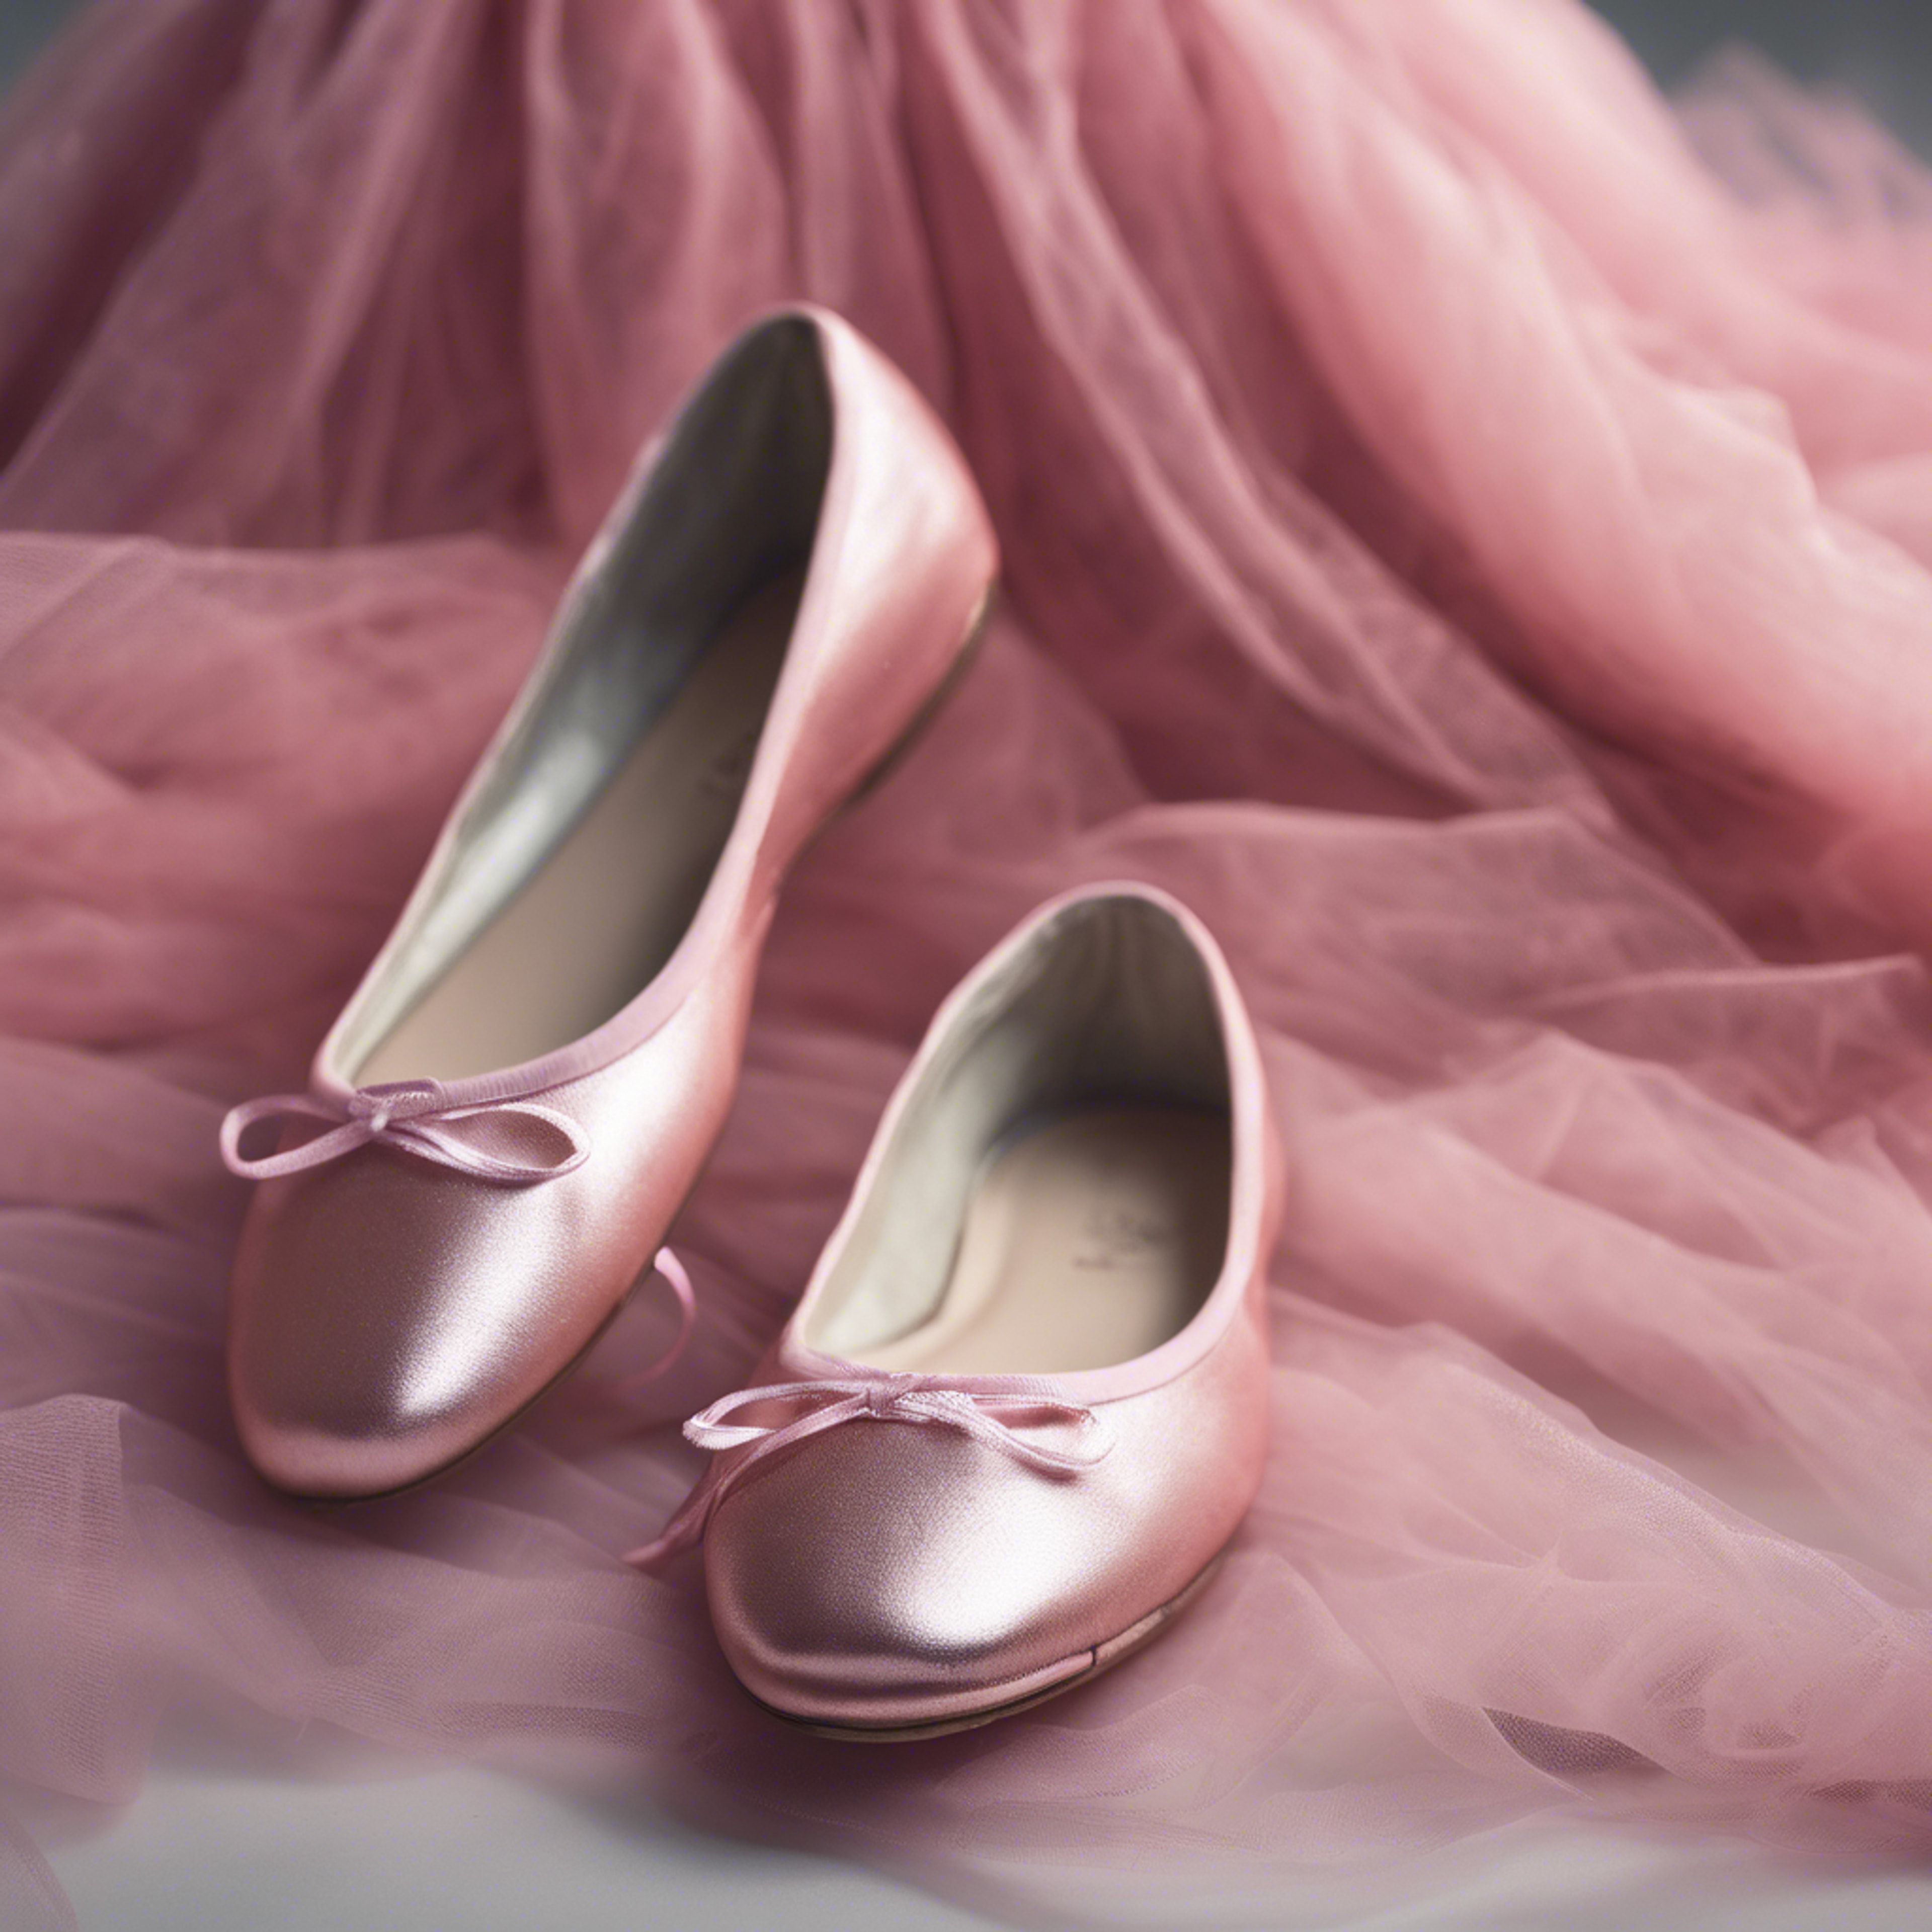 A pair of shiny ballet flats next to a pink tulle ballet skirt. Divar kağızı[61612bb497ed40a6bca1]